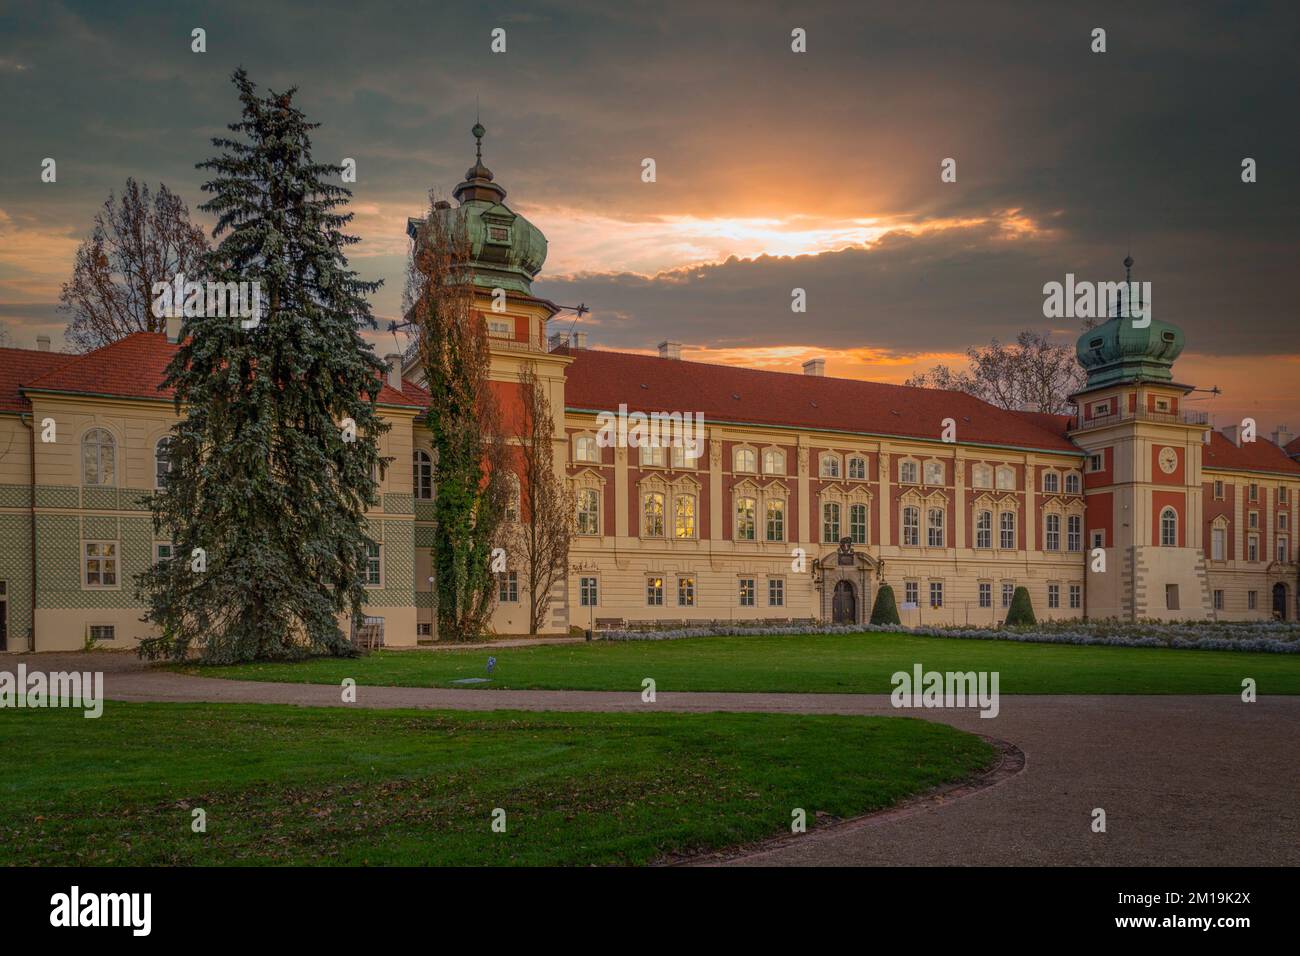 Lancut Castle - former residence of magnates in Lancut, Subcarpathian Voivodeship, Poland. Stock Photo